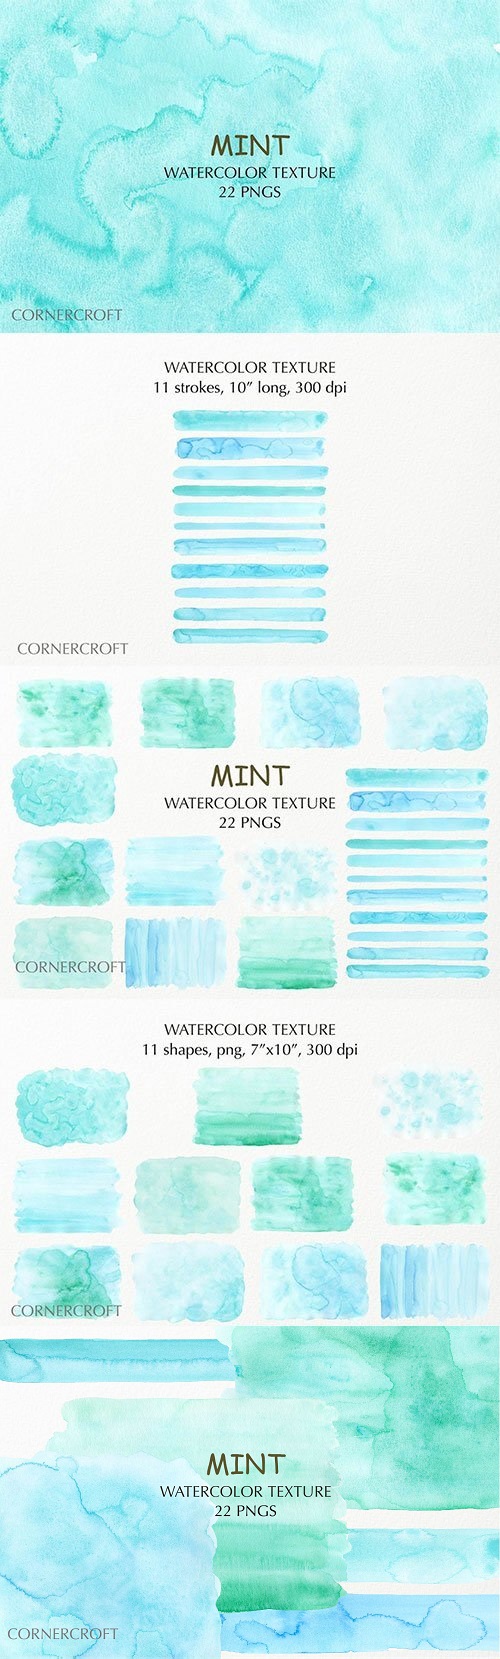 Watercolor Texture Mint 1559657